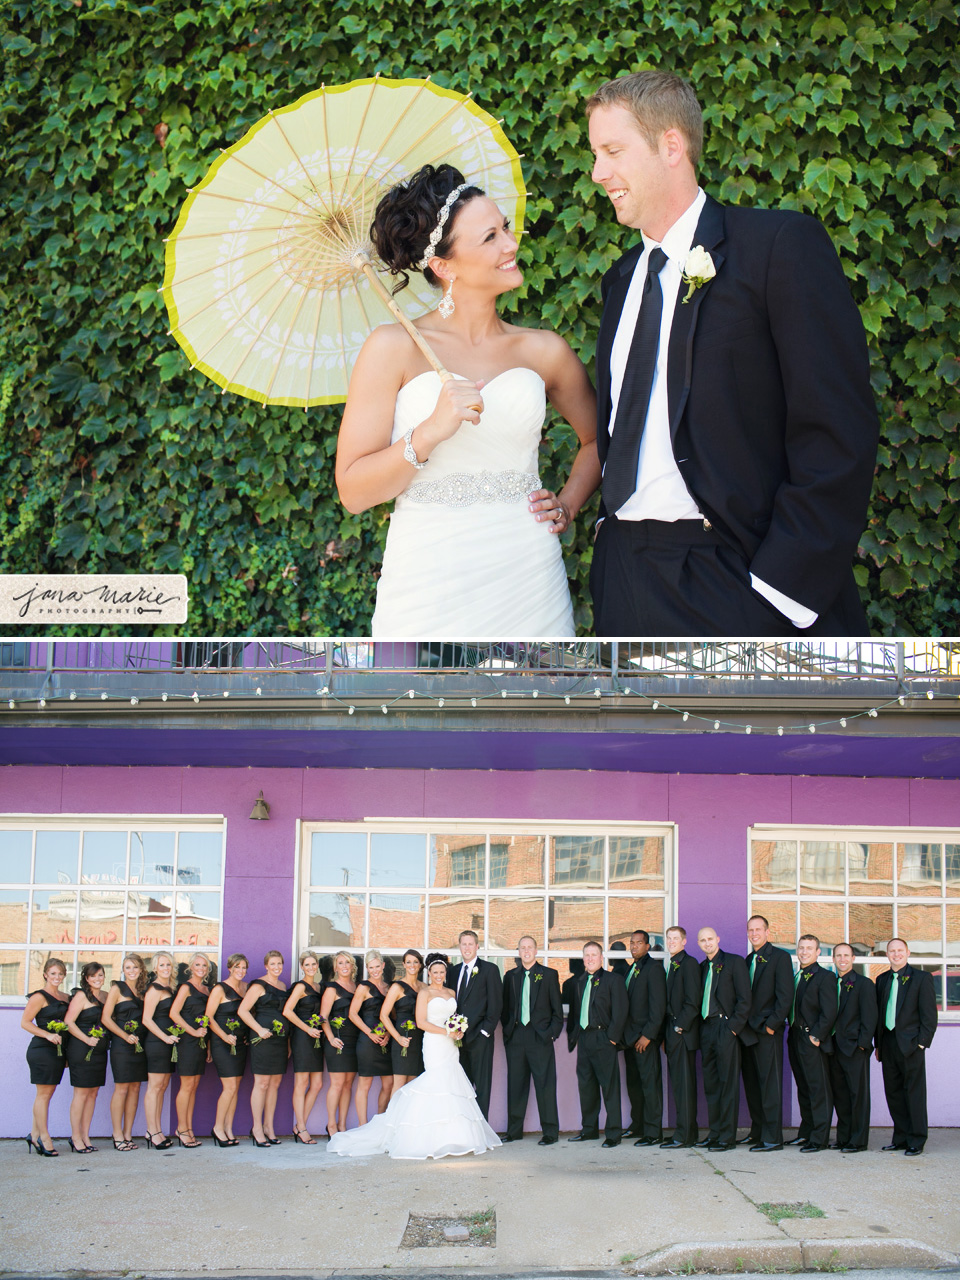 Bridal party, purple wall, KC weddings, Couple photos, Love, KC weddings